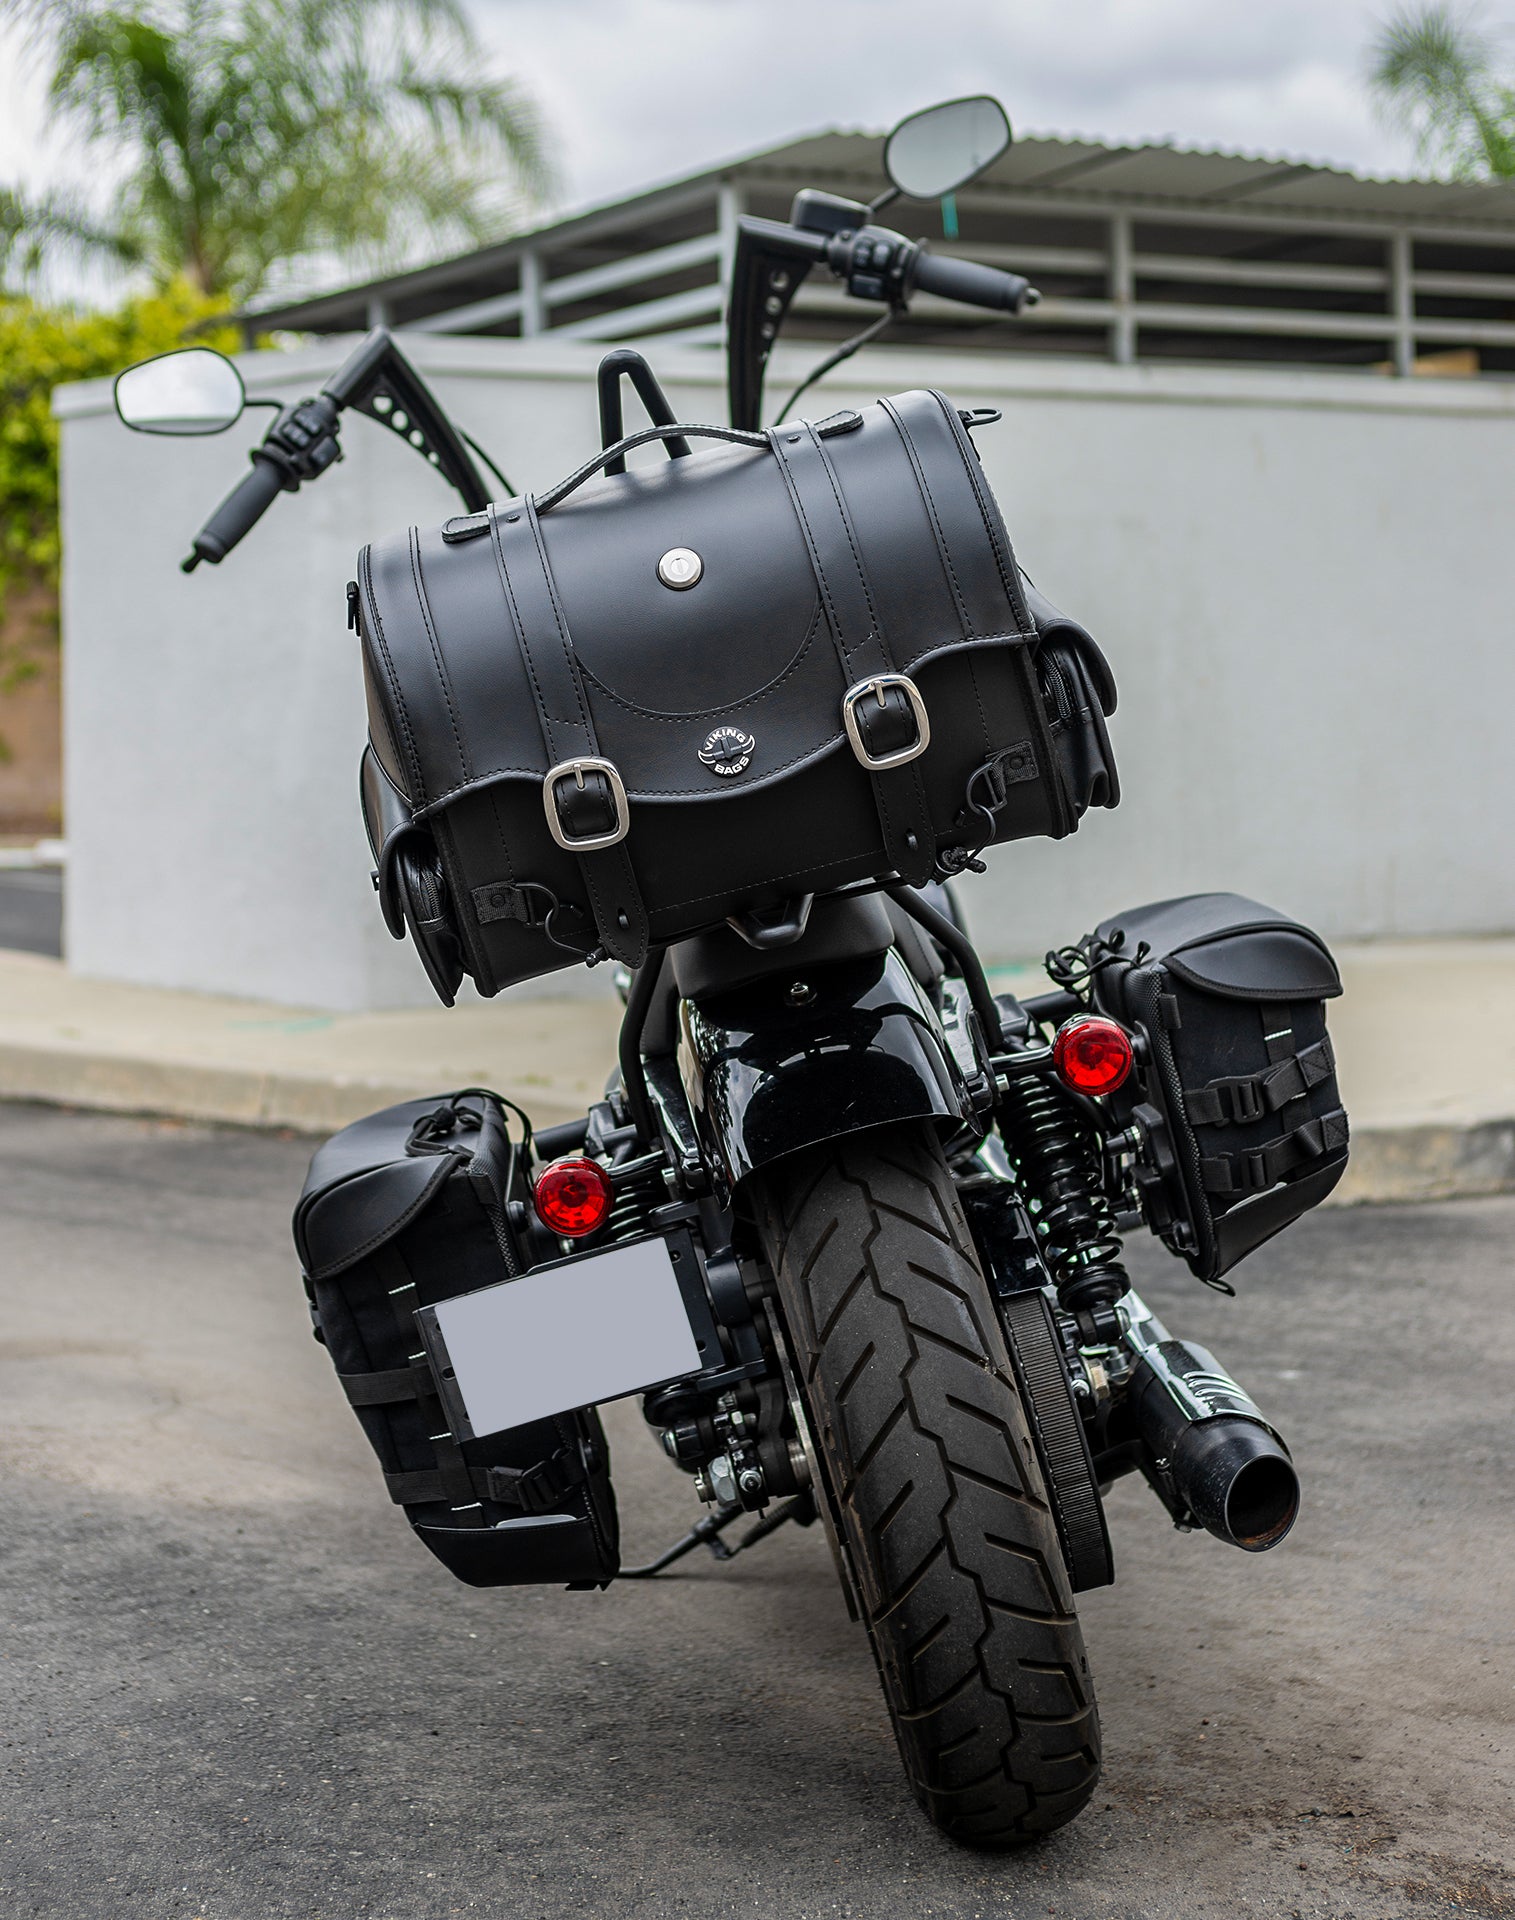 18L - Century Medium Honda Leather Motorcycle Sissy Bar Bag